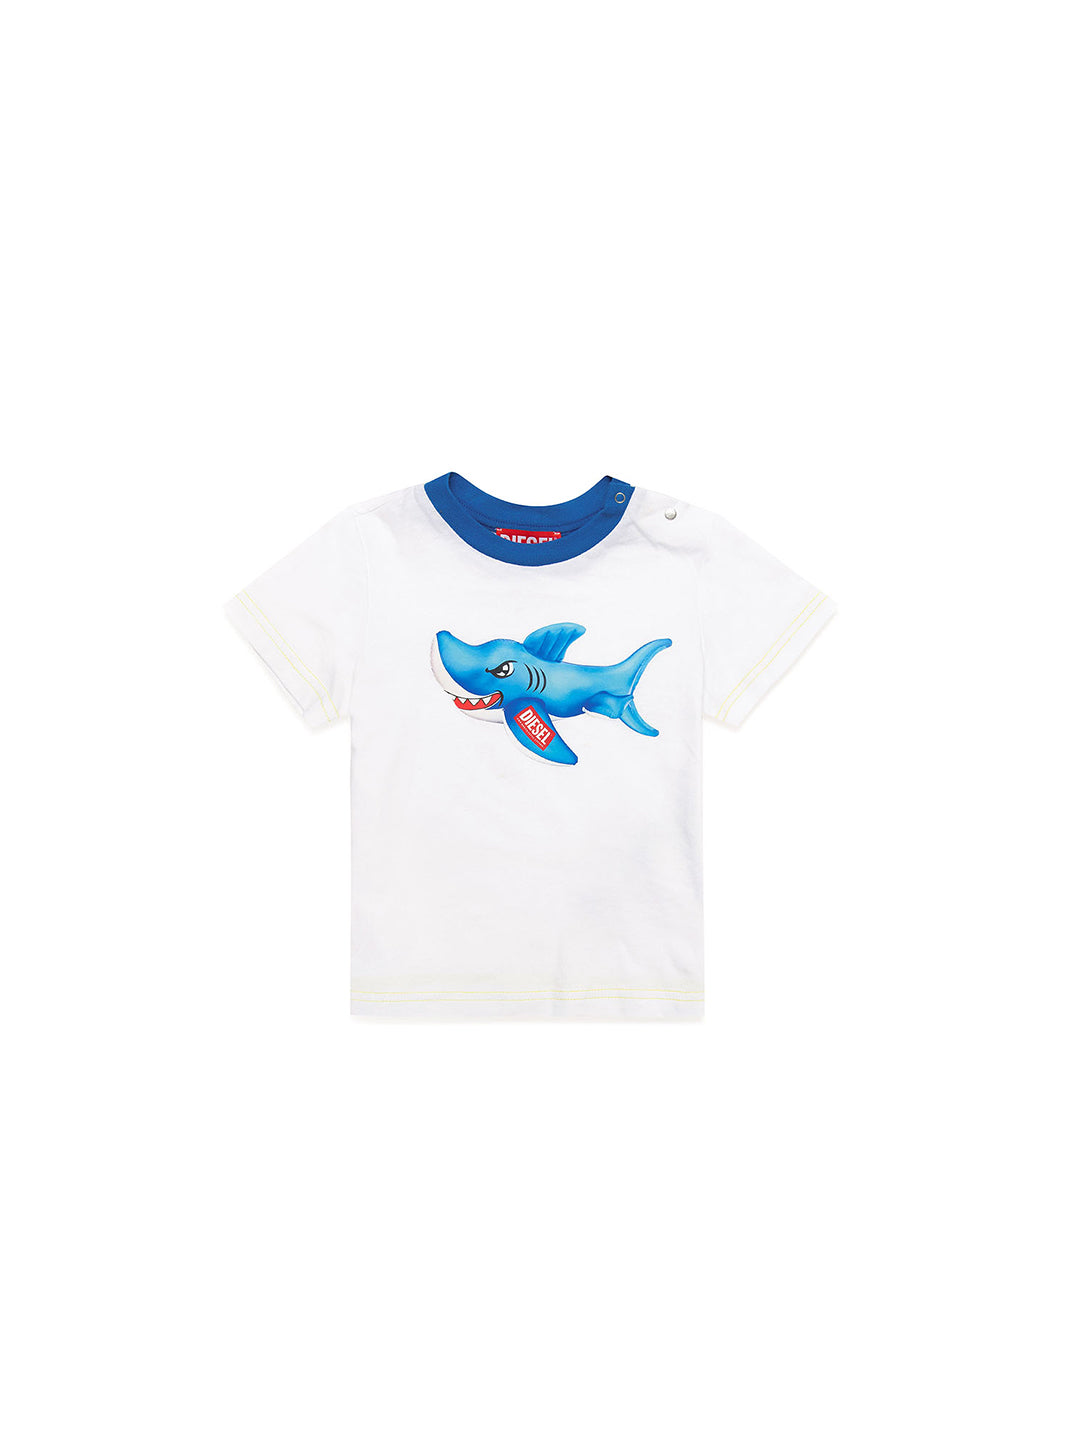 Diesel t shirt bianca e blu con stampa neonati